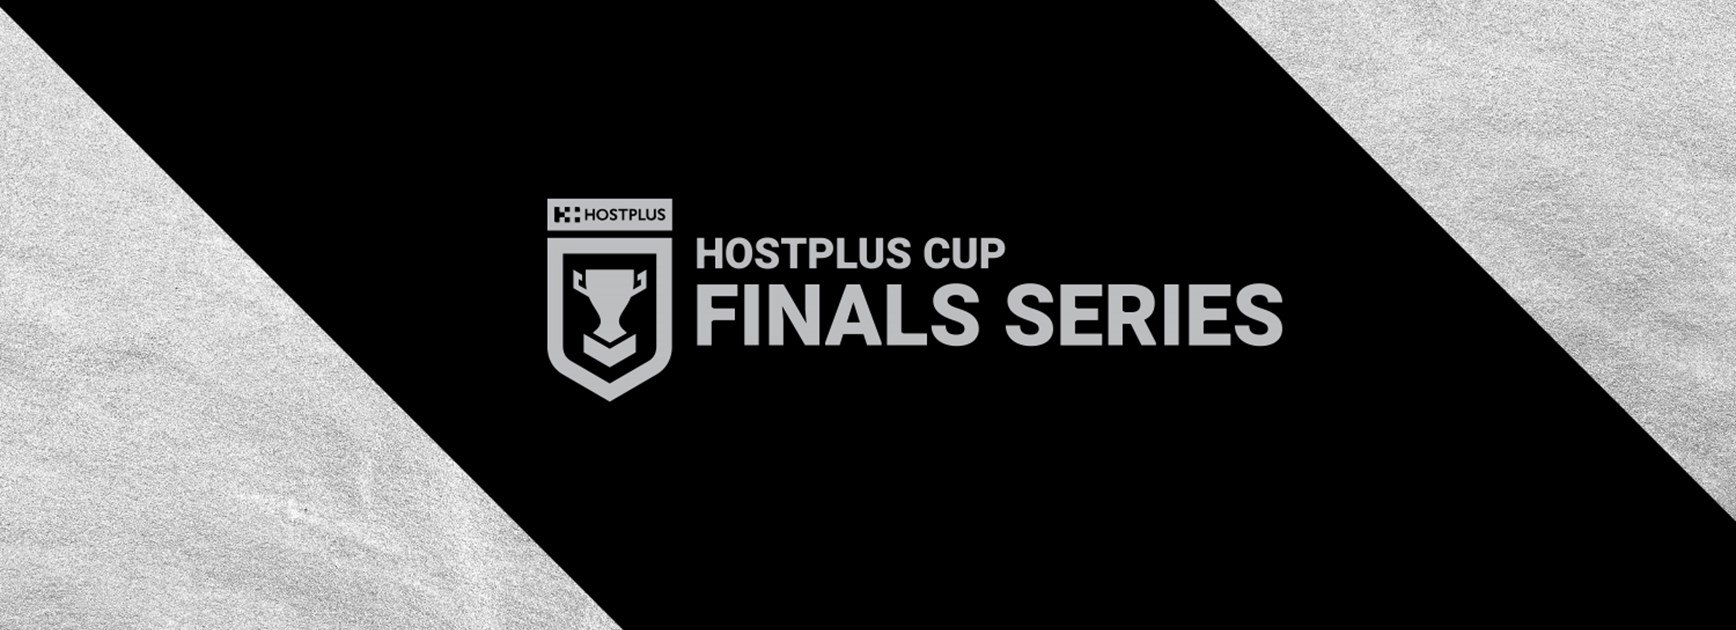 Hostplus Cup Finals Week 3 team lists